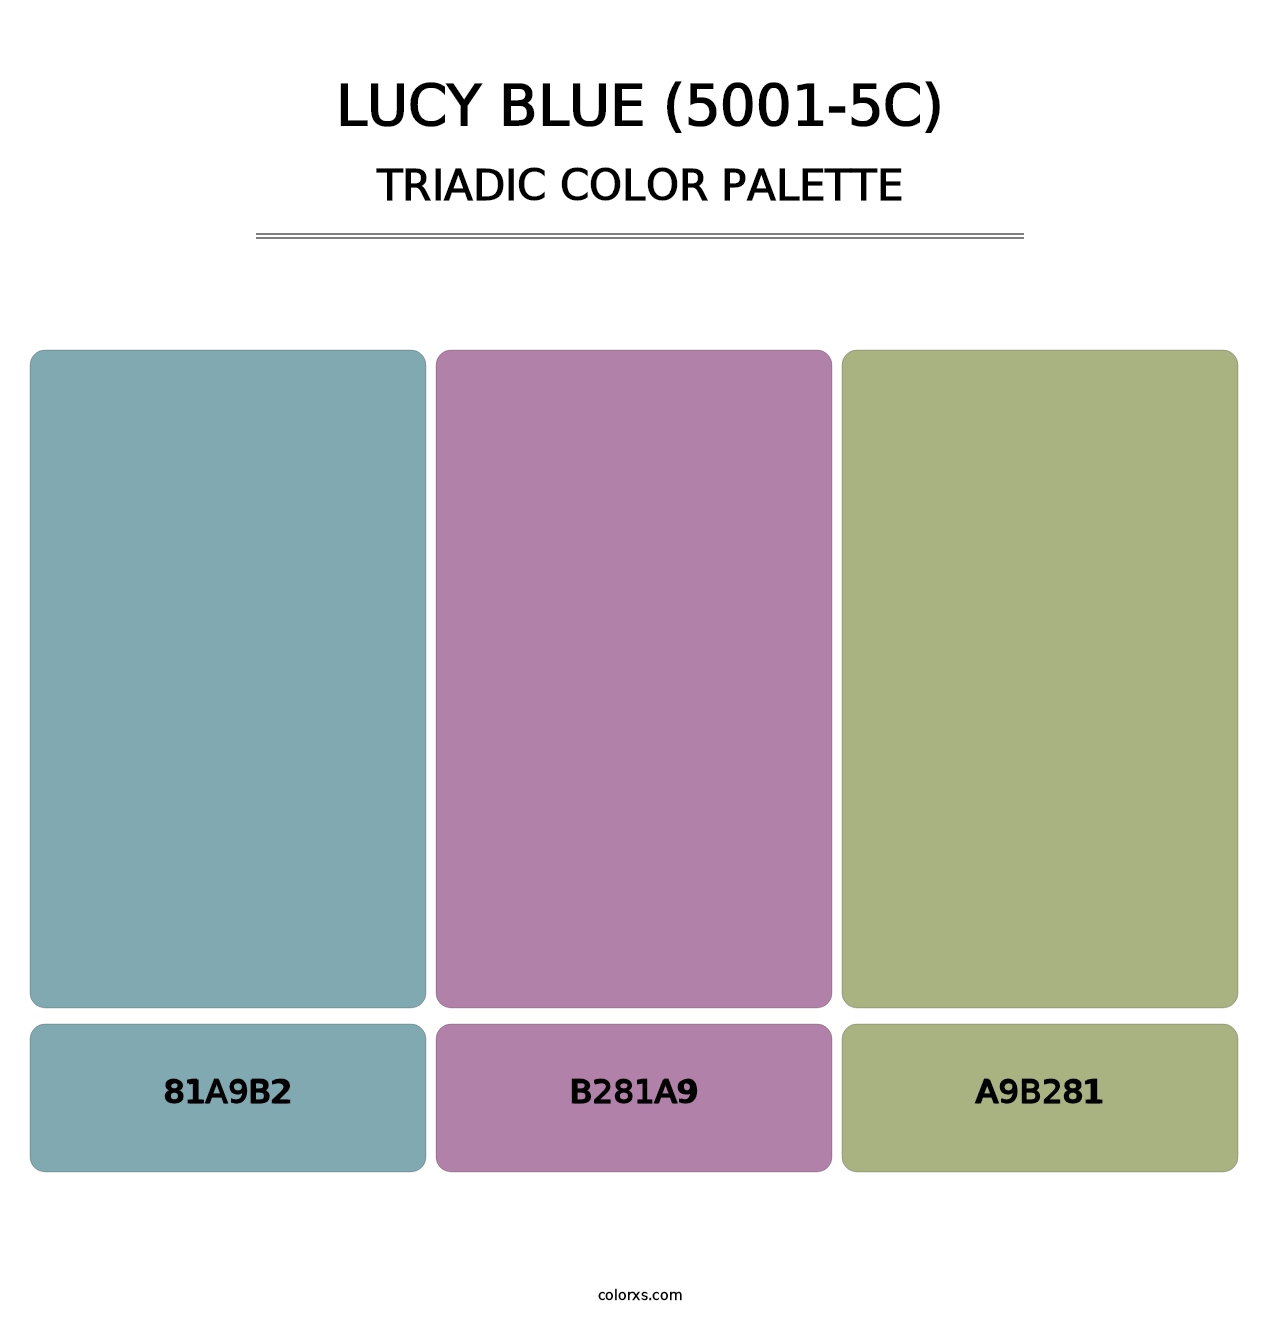 Lucy Blue (5001-5C) - Triadic Color Palette